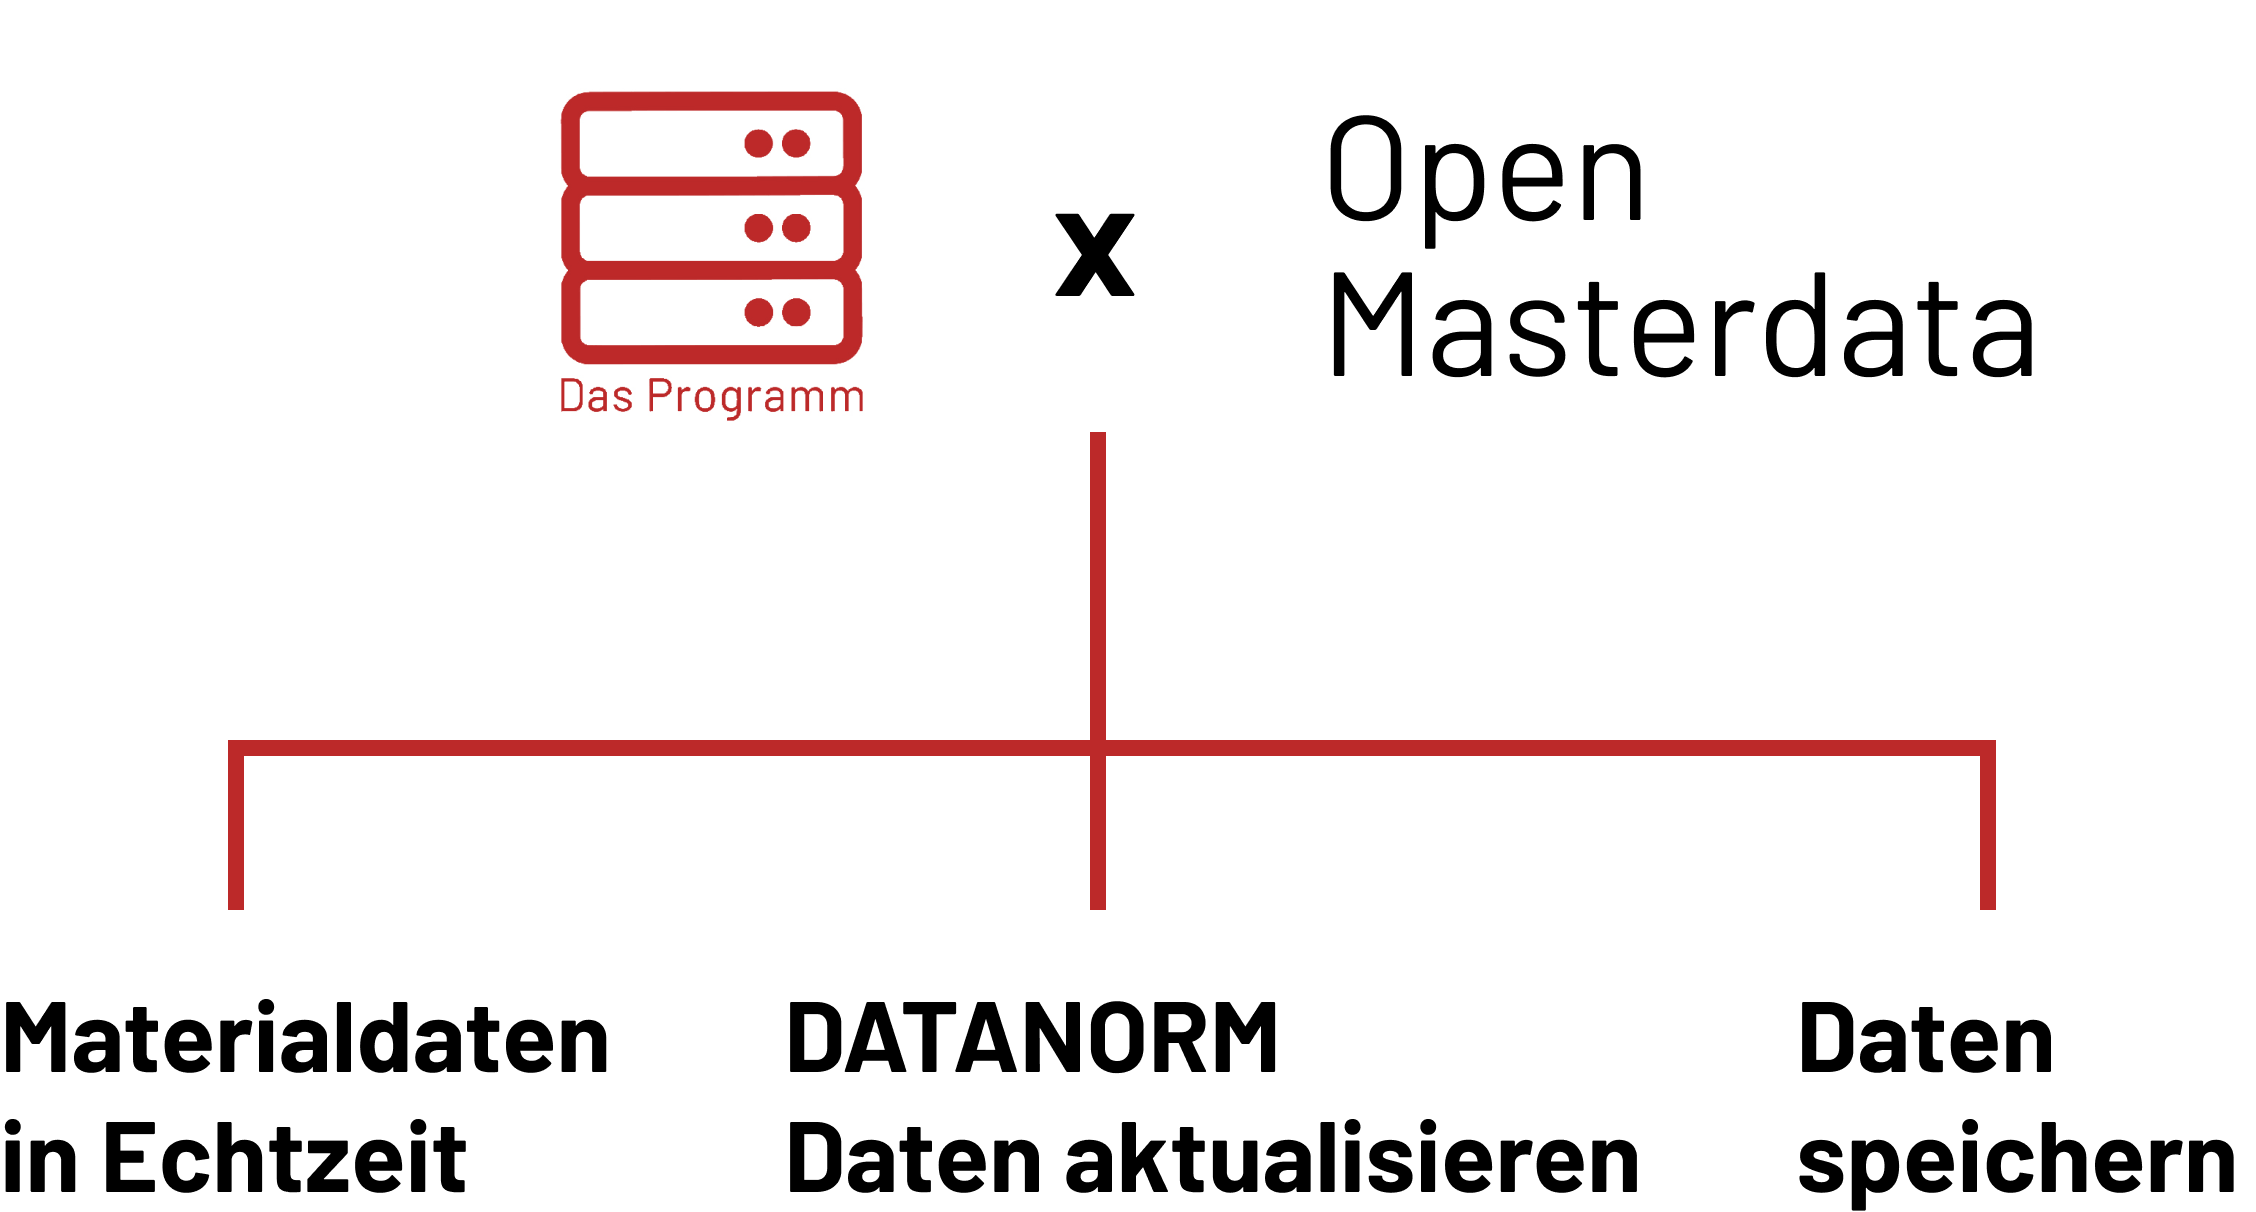 open-masterdata-dp-x-open-masterdata.png